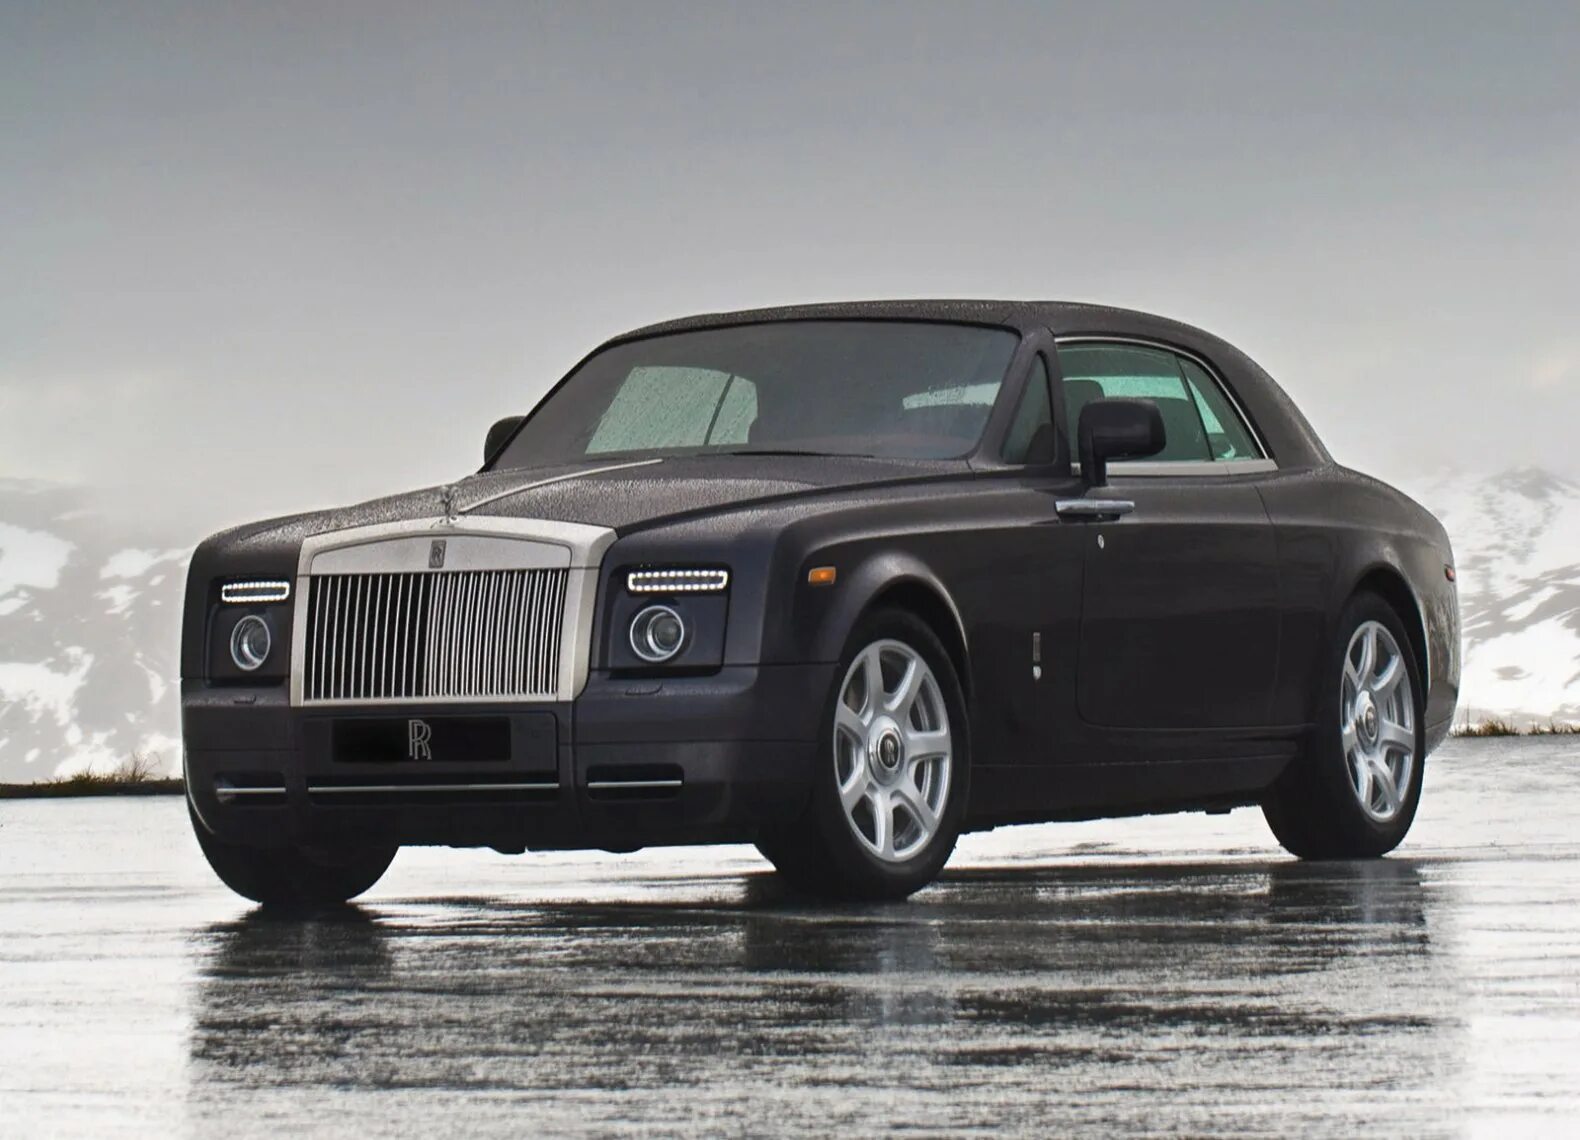 Rolls com. Роллс Ройс Фантом купе. Rolls Royce Phantom Coupe 2008. Роллс Ройс Фантом 2008. Rolls Royce Phantom 2010.